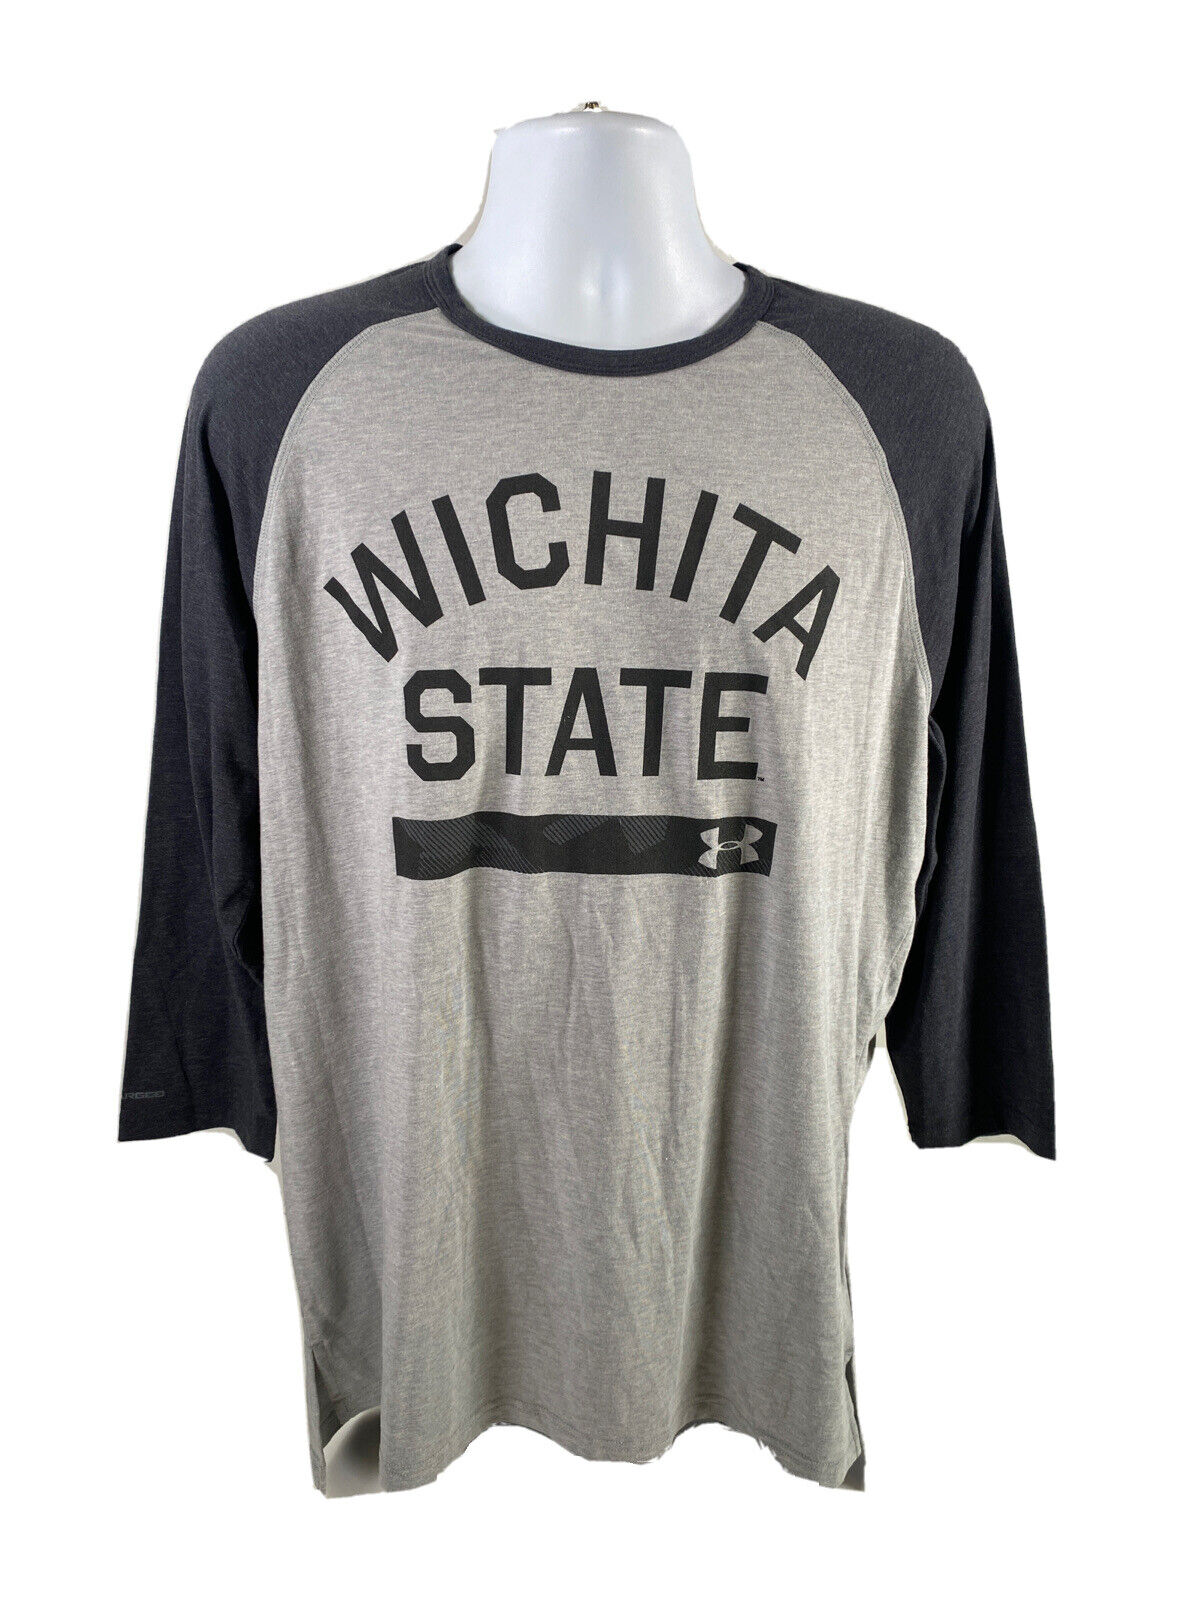 NEW Under Armour Men's Gray Wichita State 3/4 Sleeve Baseball Shirt - L